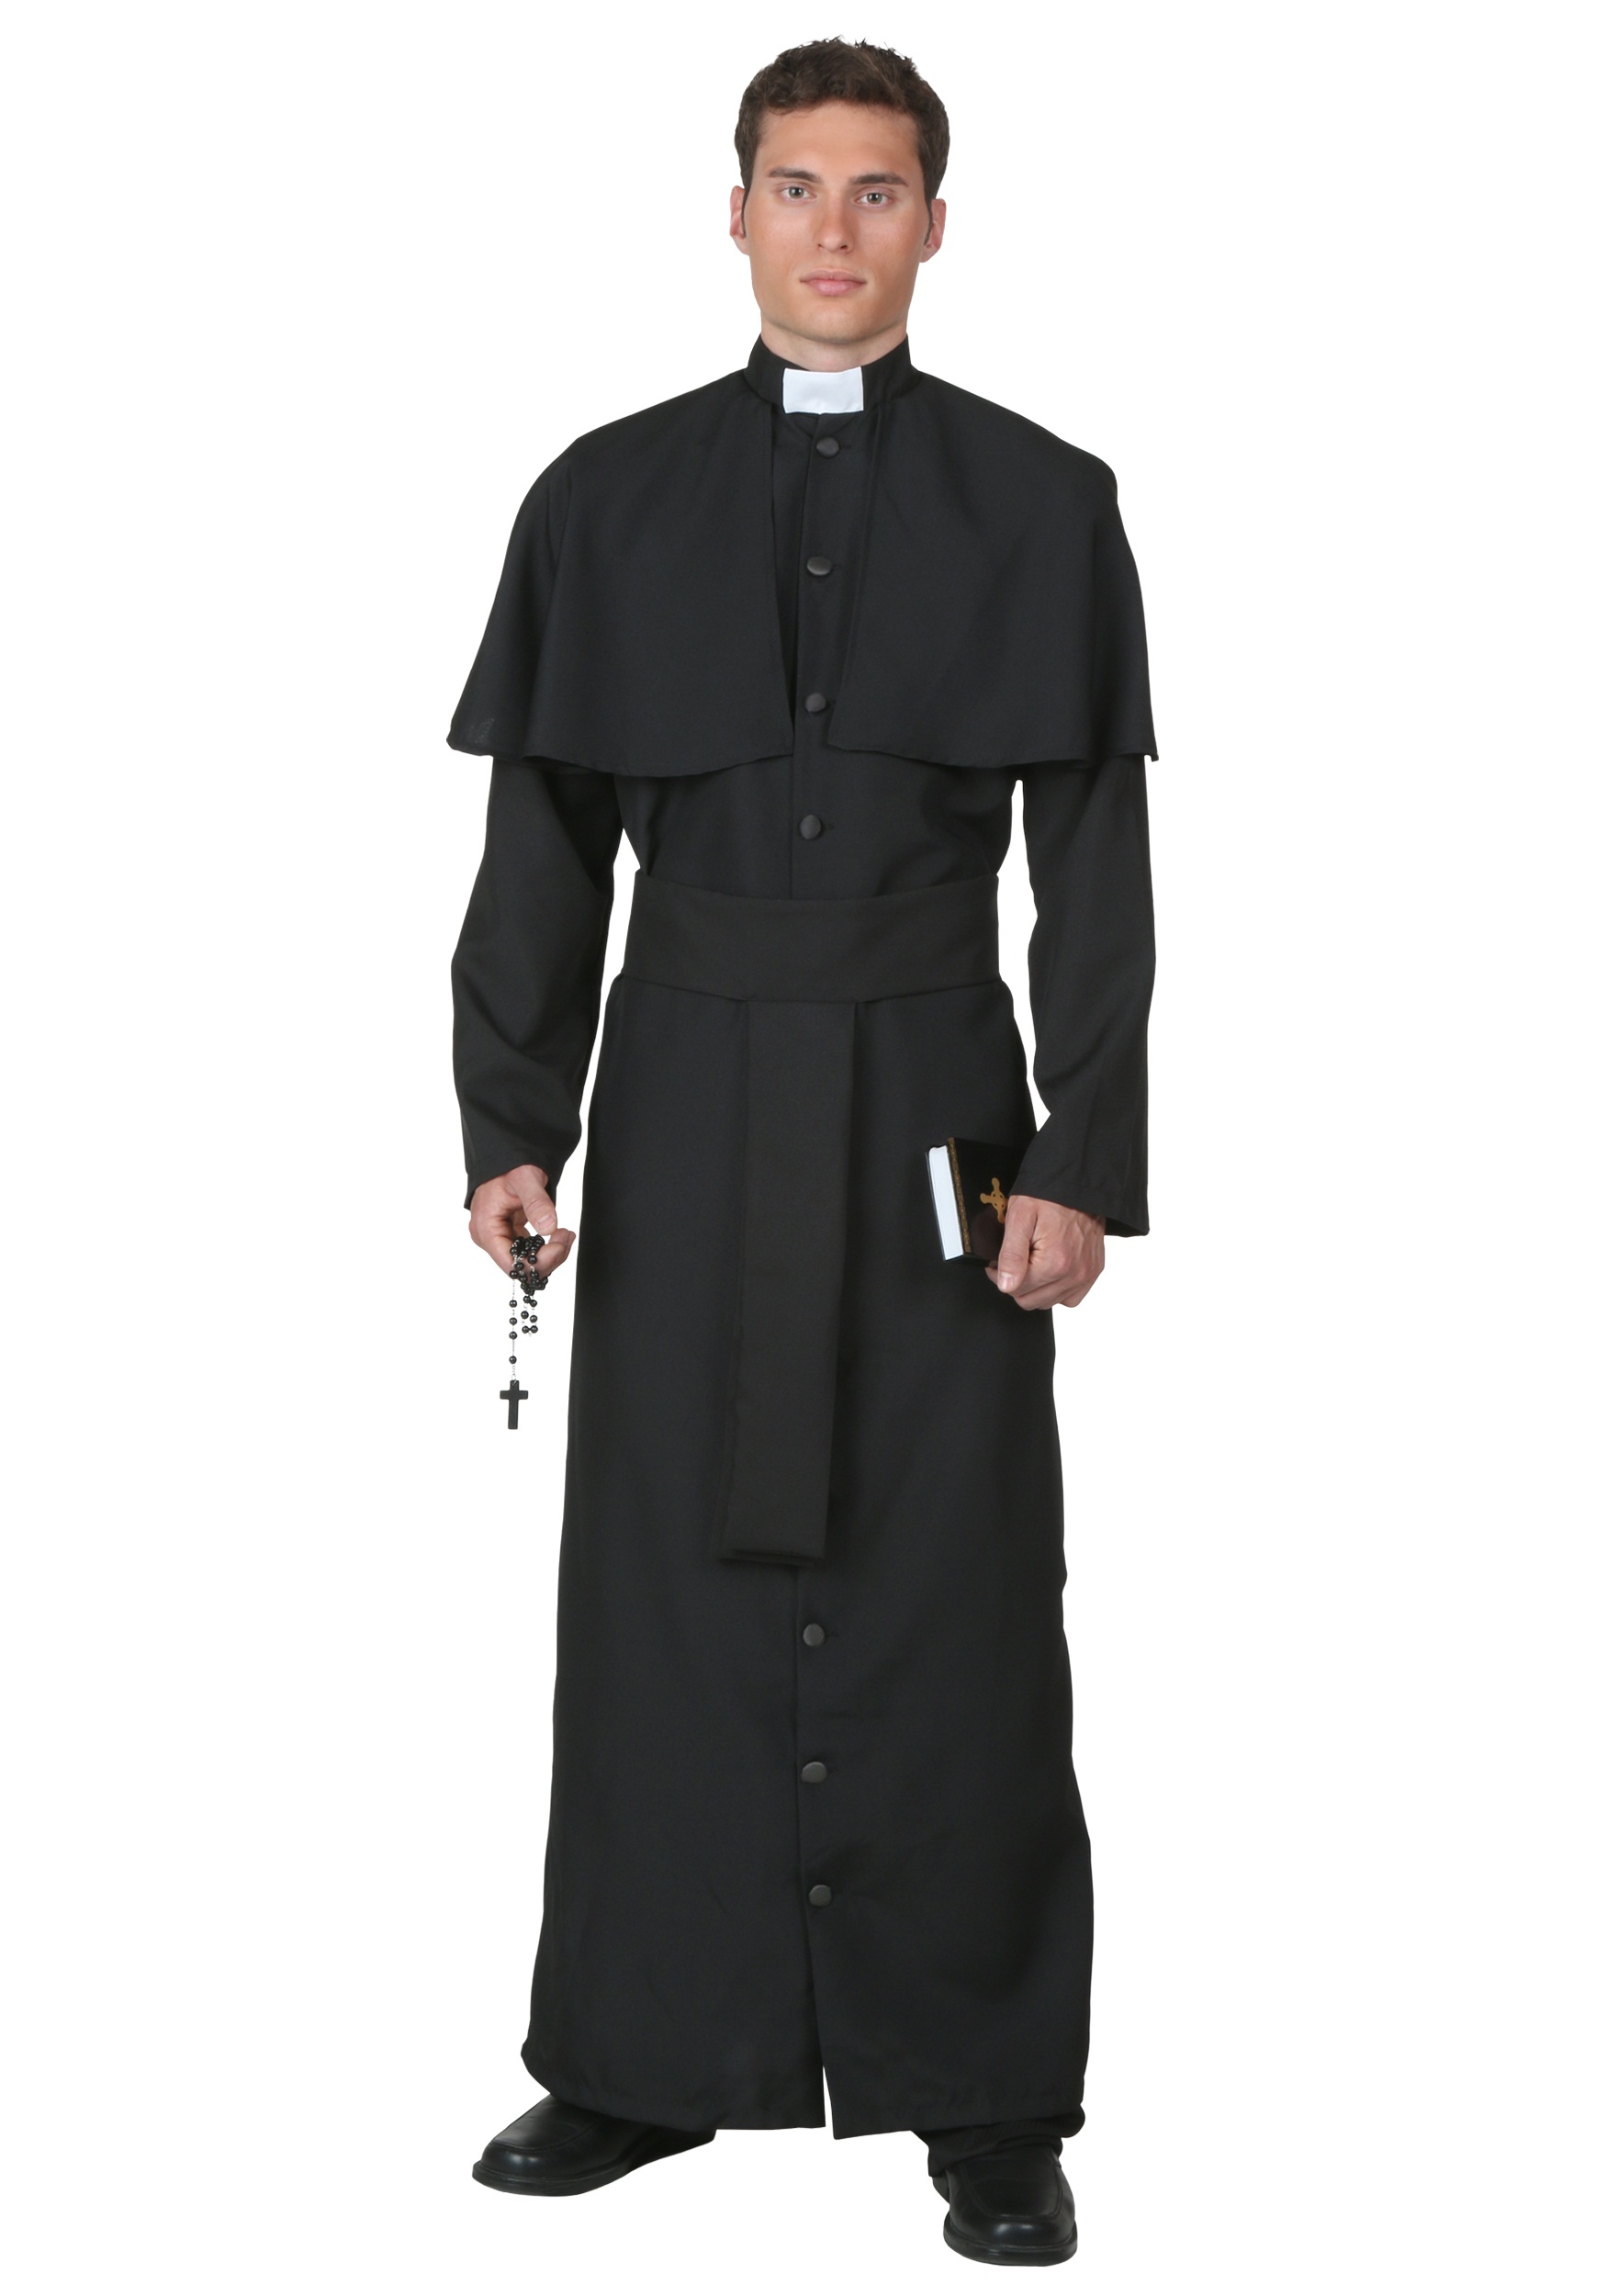 Deluxe Priest Costume | Religious Adult Costumes | Exclusive